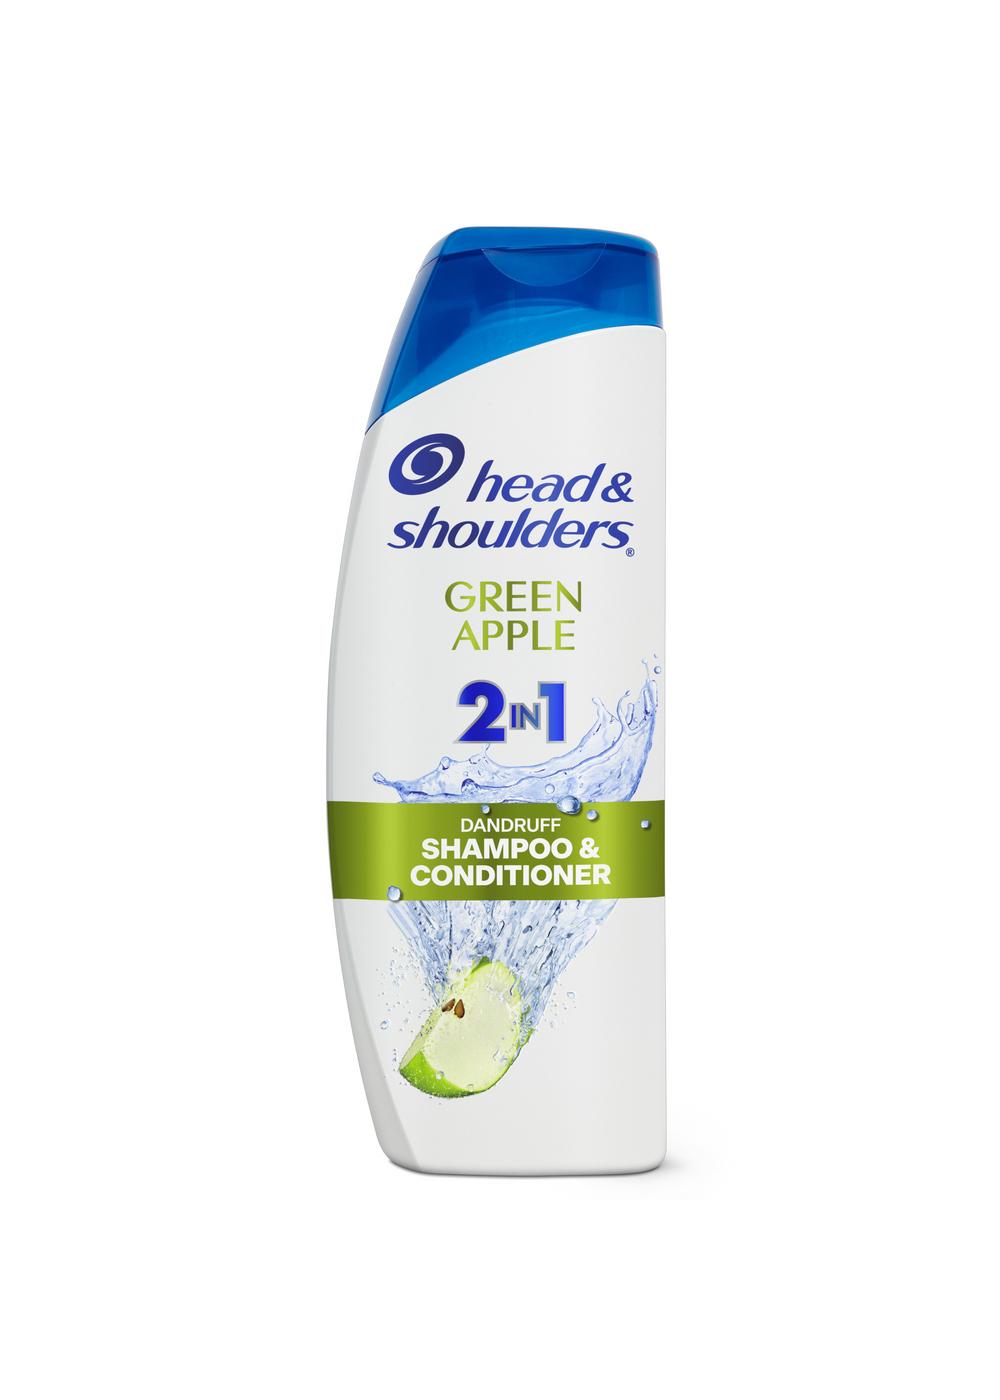 Head & Shoulders 2 in 1 Dandruff Shampoo + Conditioner - Green Apple; image 4 of 11